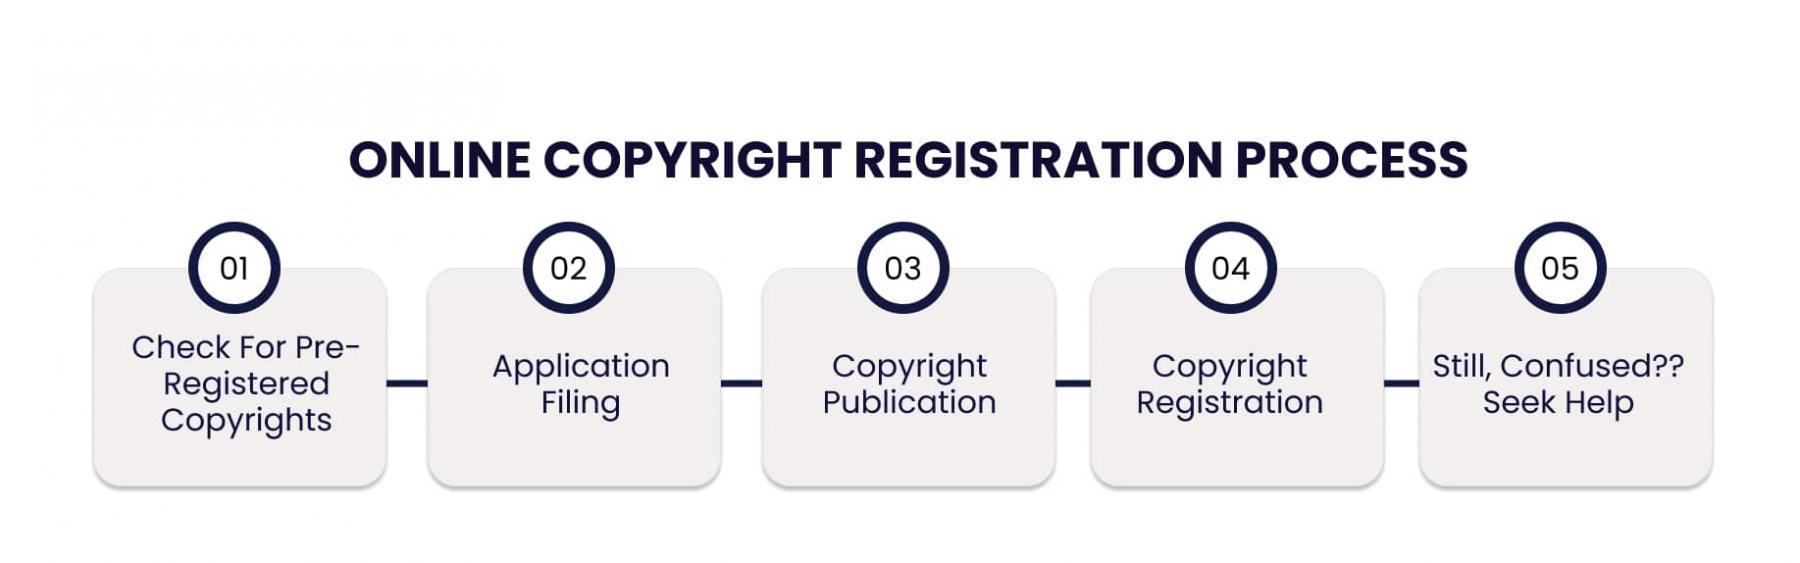 Online Copyright Registration Process